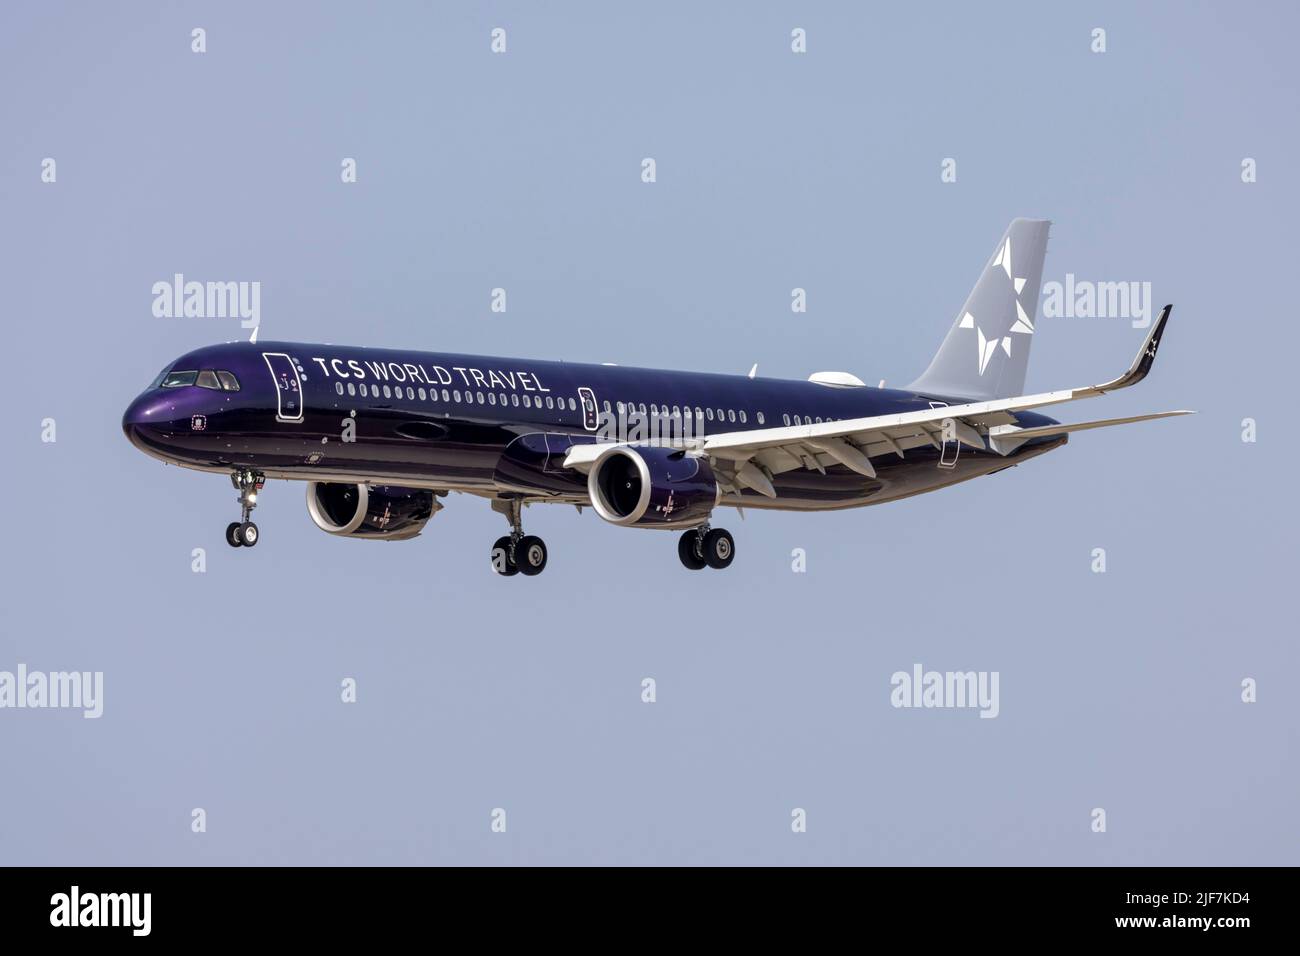 TCS World Travel (Titan Airways) Airbus A321-253NX (REG: G-XATW) freshly painted in new colour scheme. Stock Photo